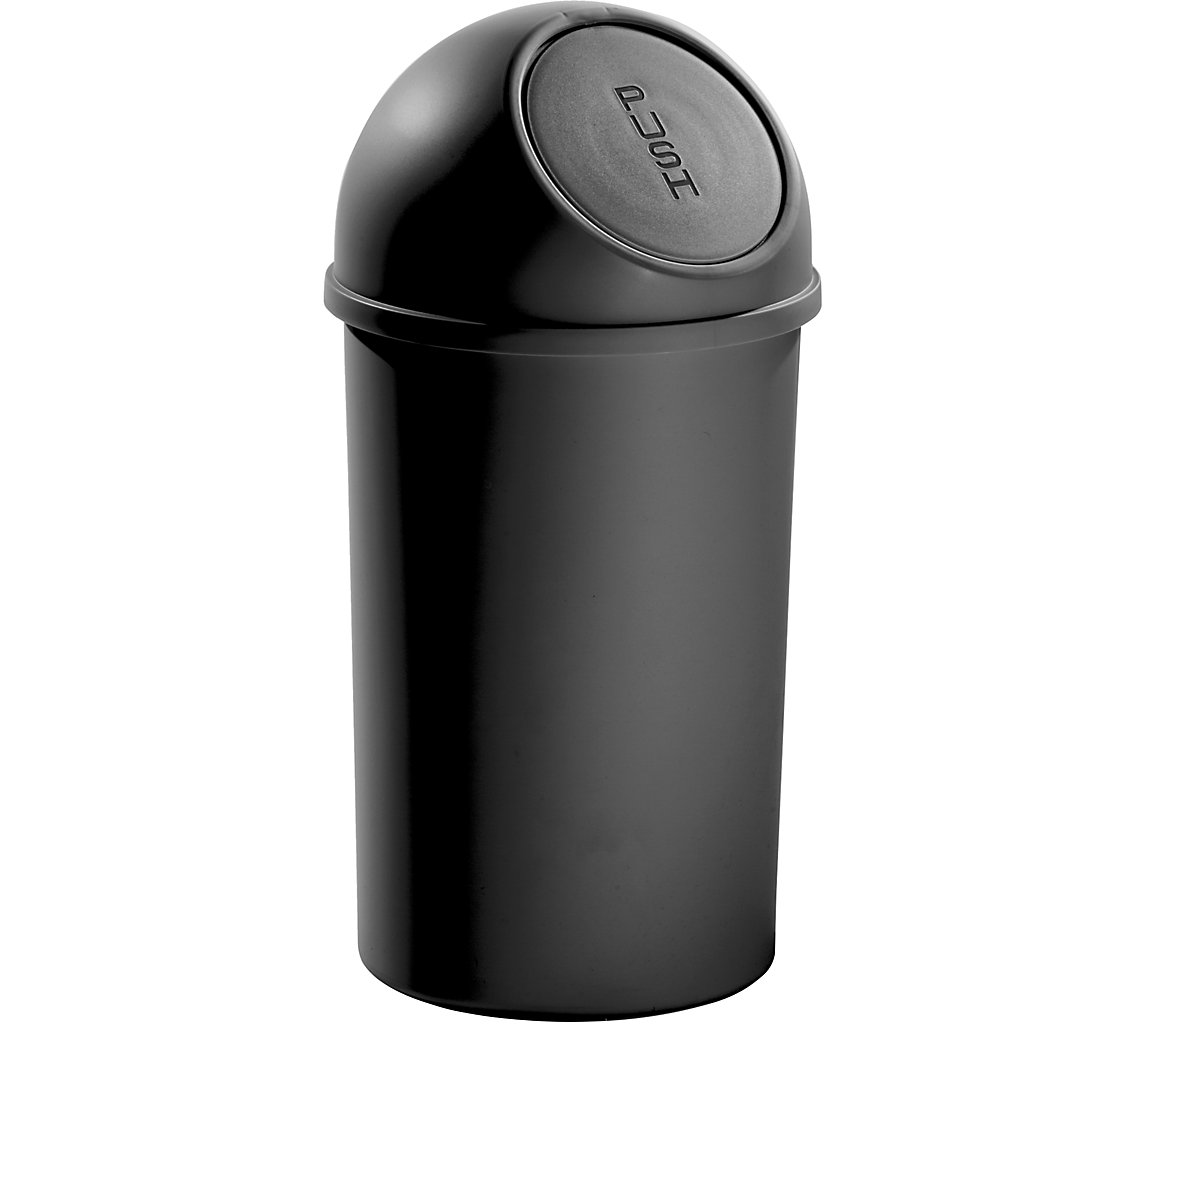 Push top waste bin made of plastic – helit, capacity 25 l, pack of 3, HxØ 615 x 315 mm, black-4